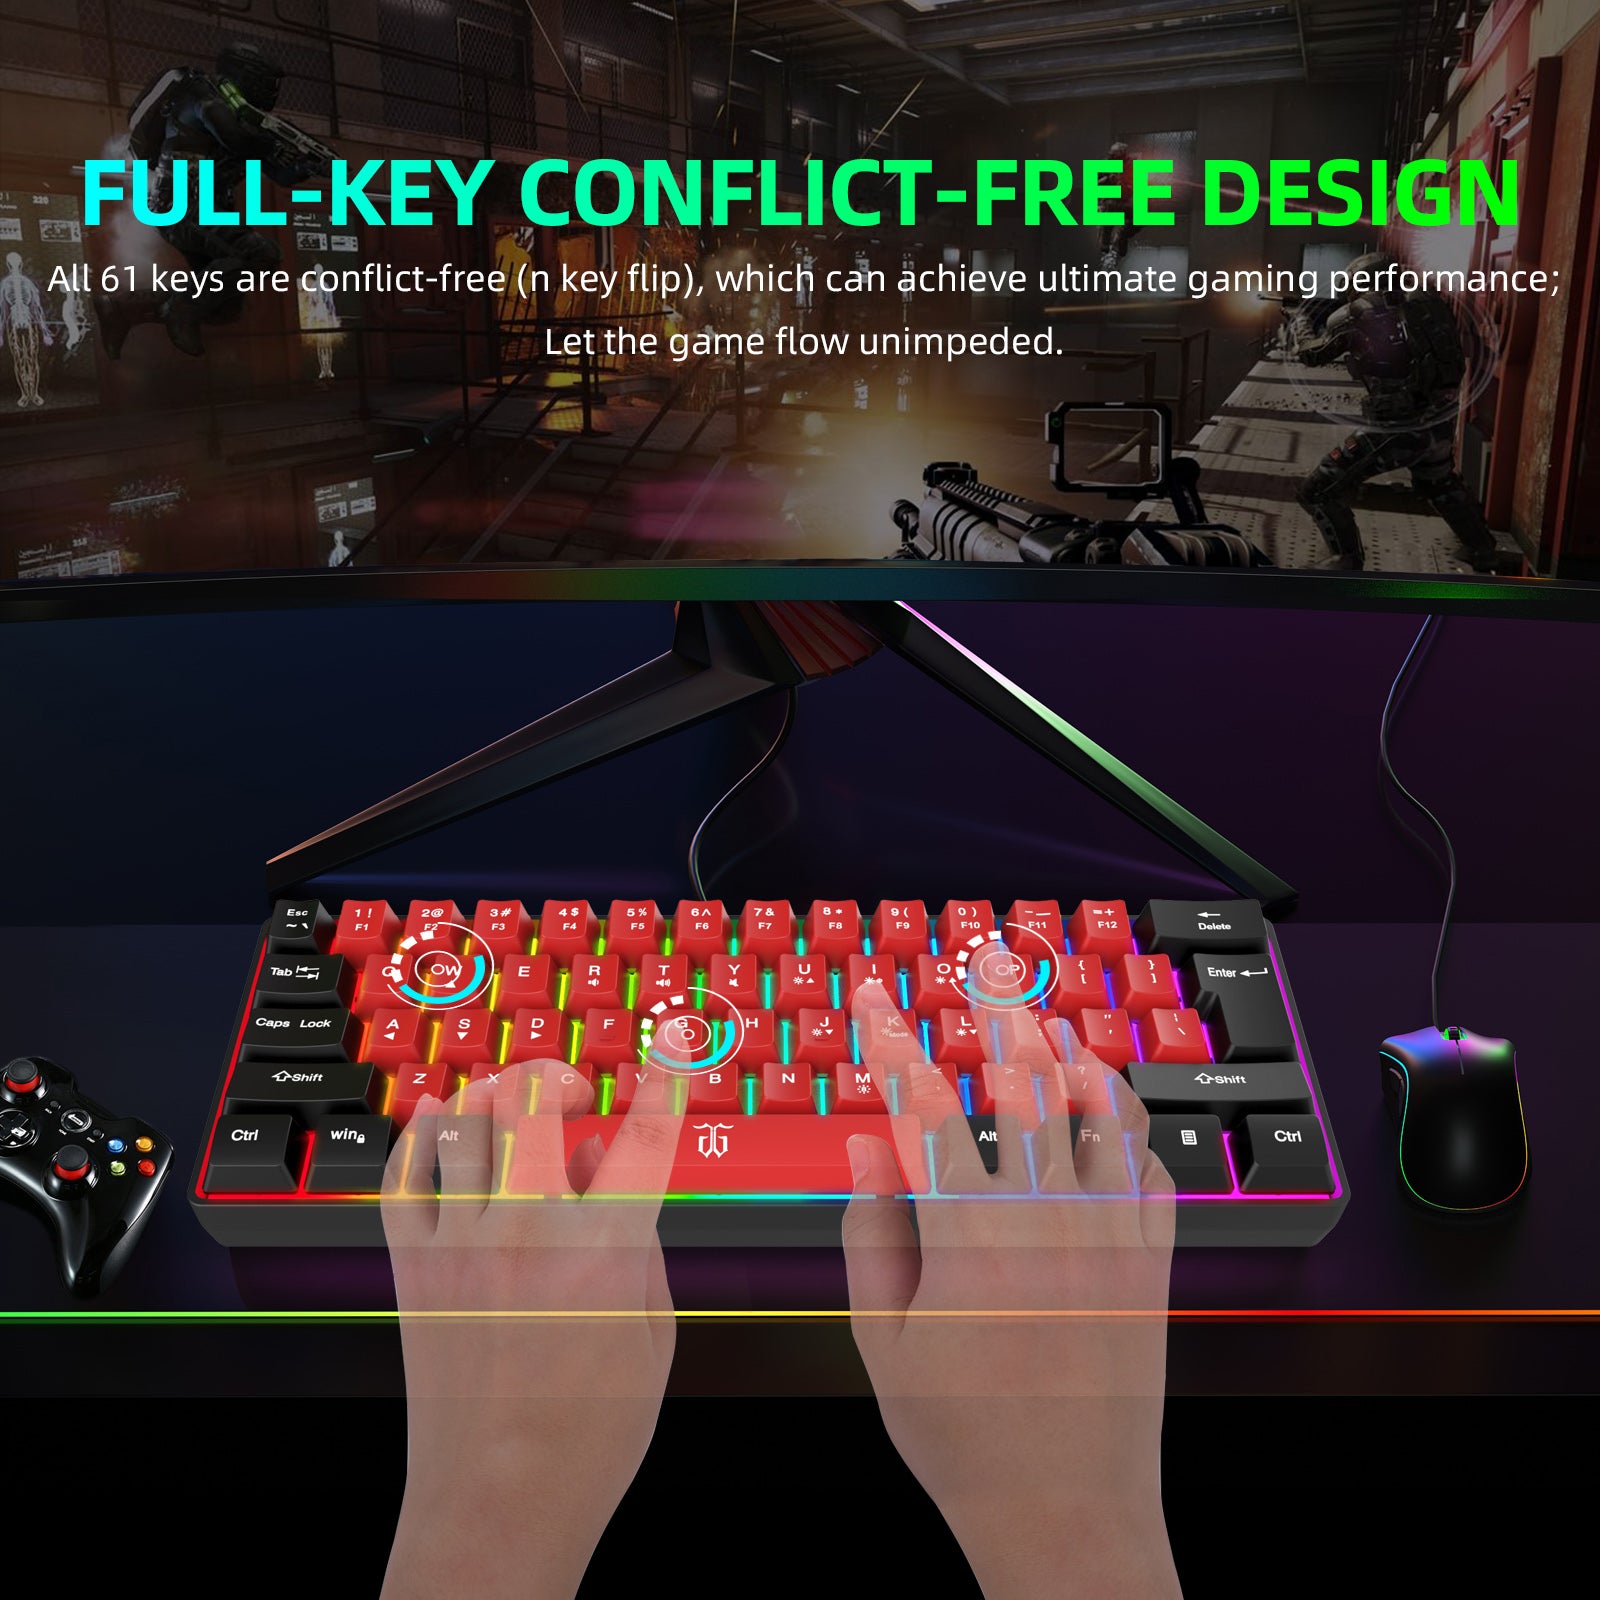 Snpurdiri 60% Membrane Wired Gaming Keyboard, Black-Red